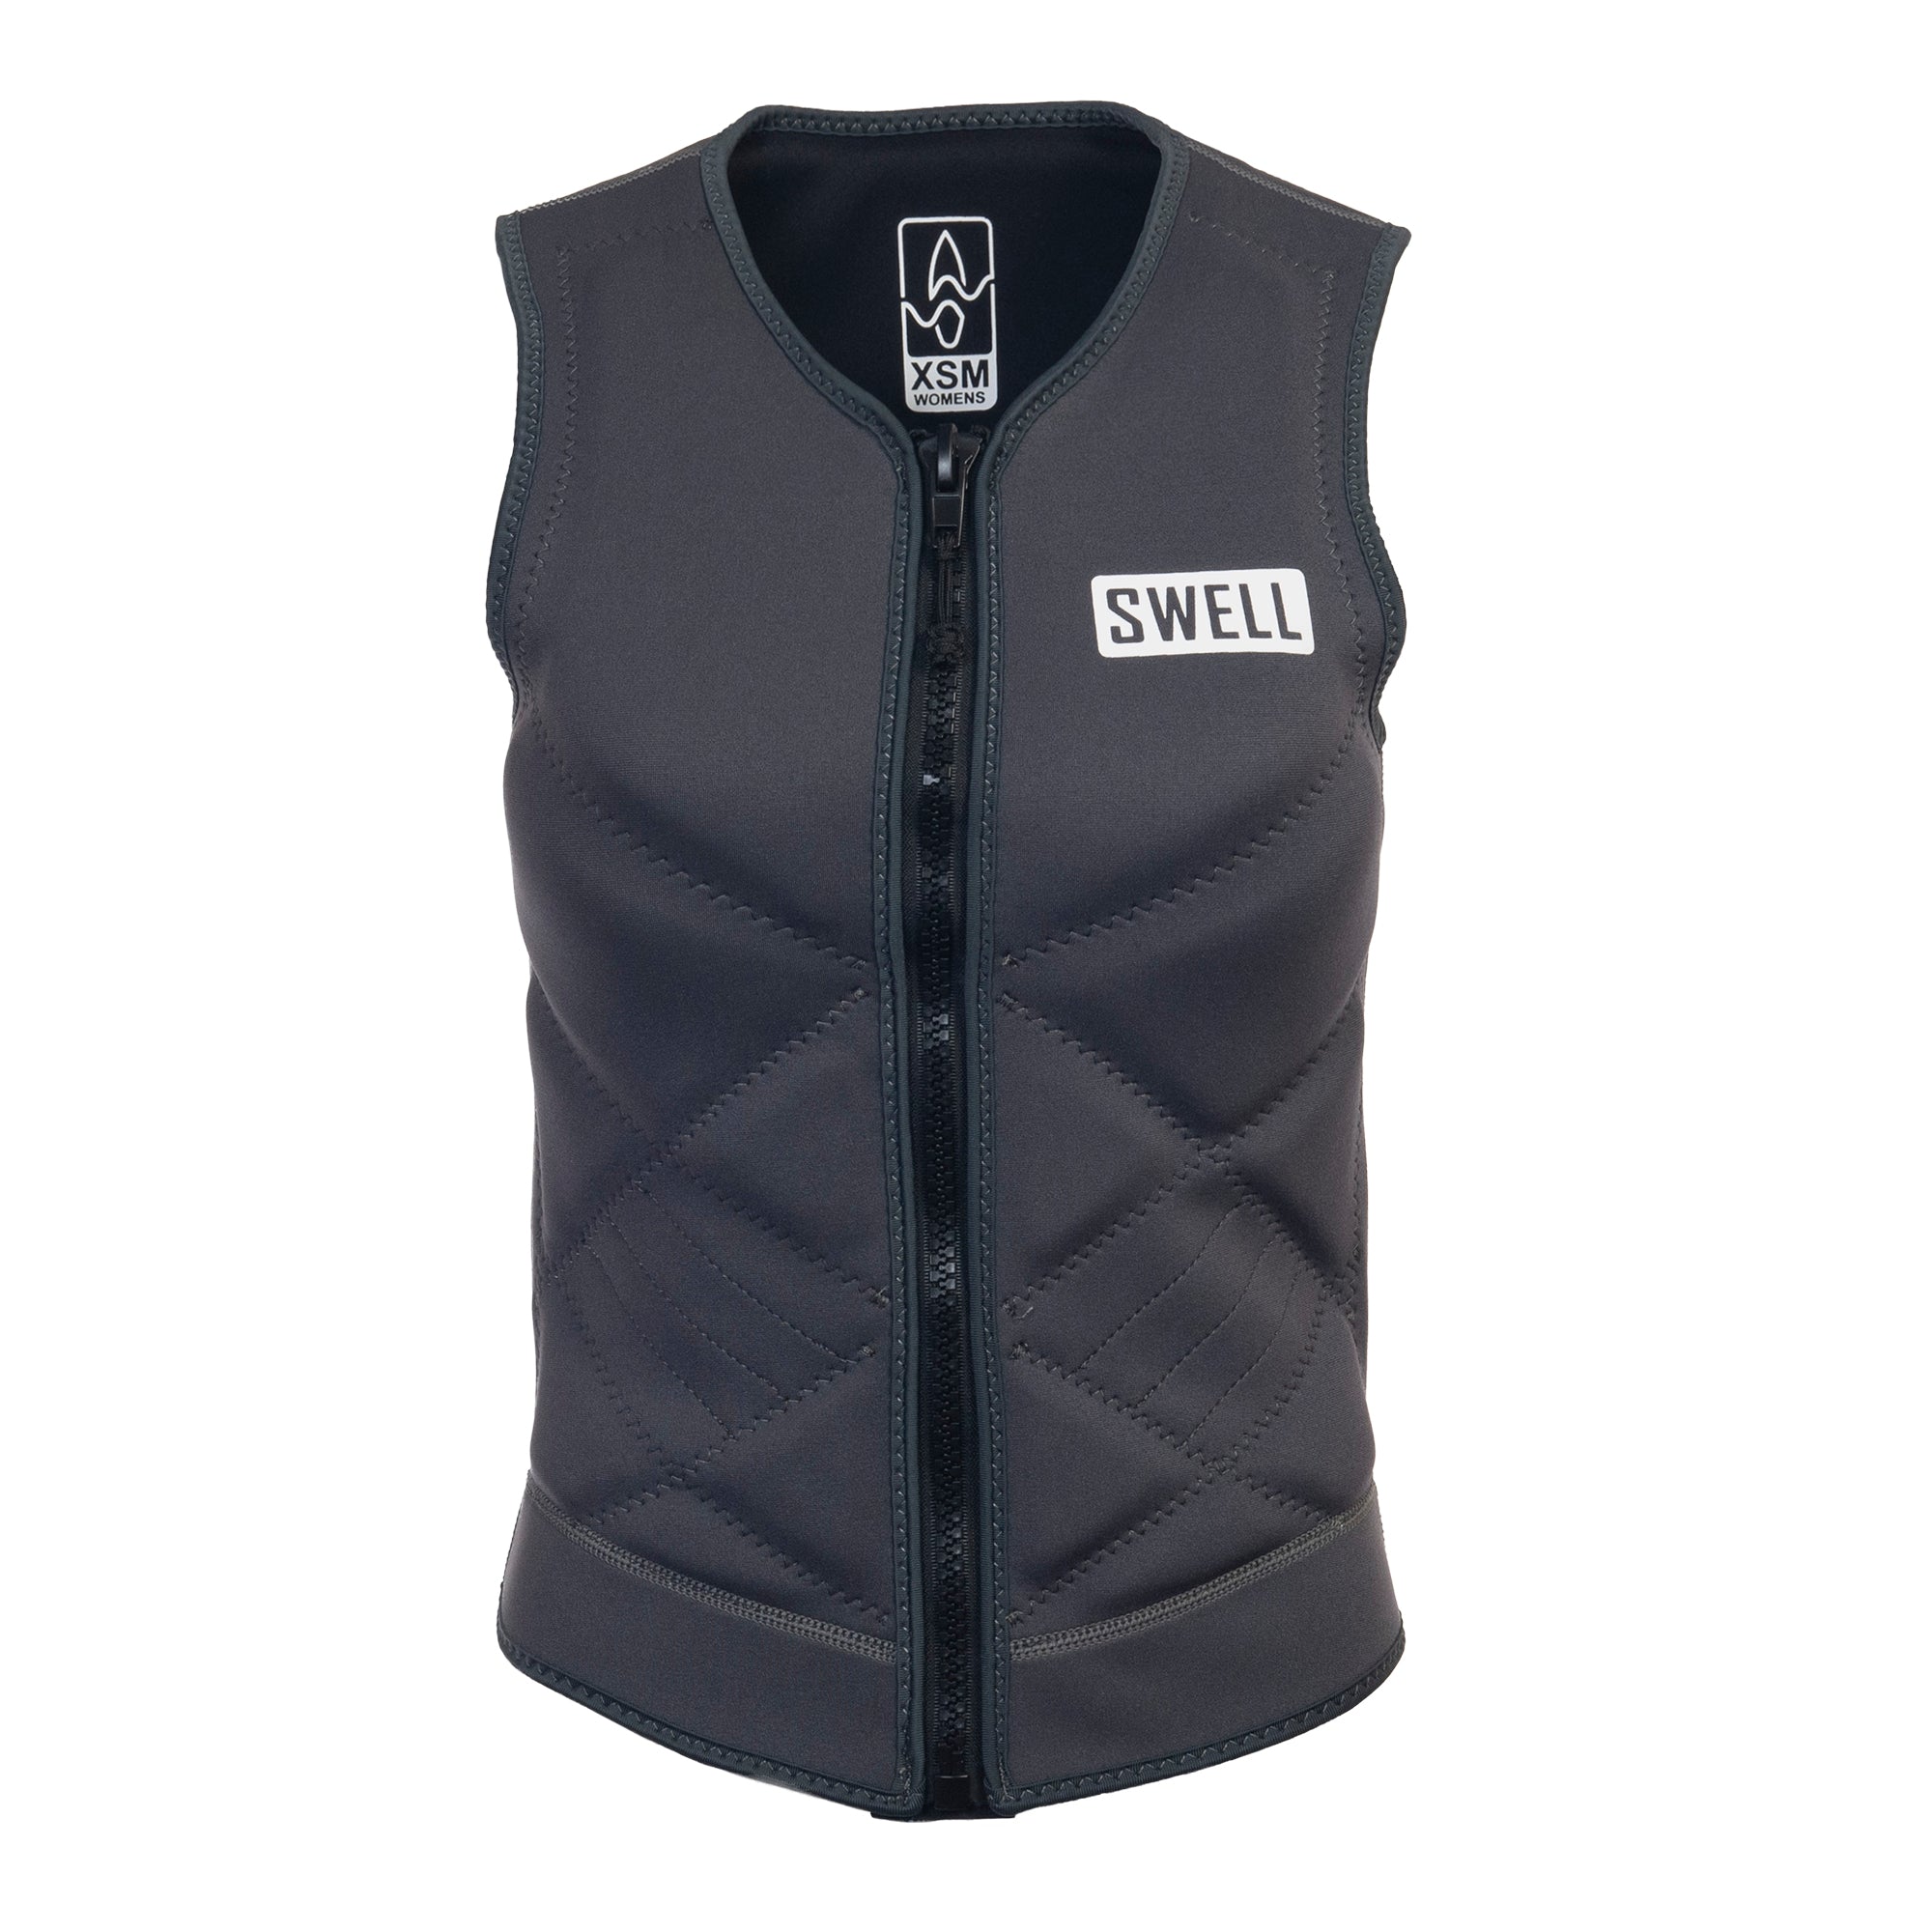 SWELL Comp Vest - Women's Charcoal - Neoprene Jacket